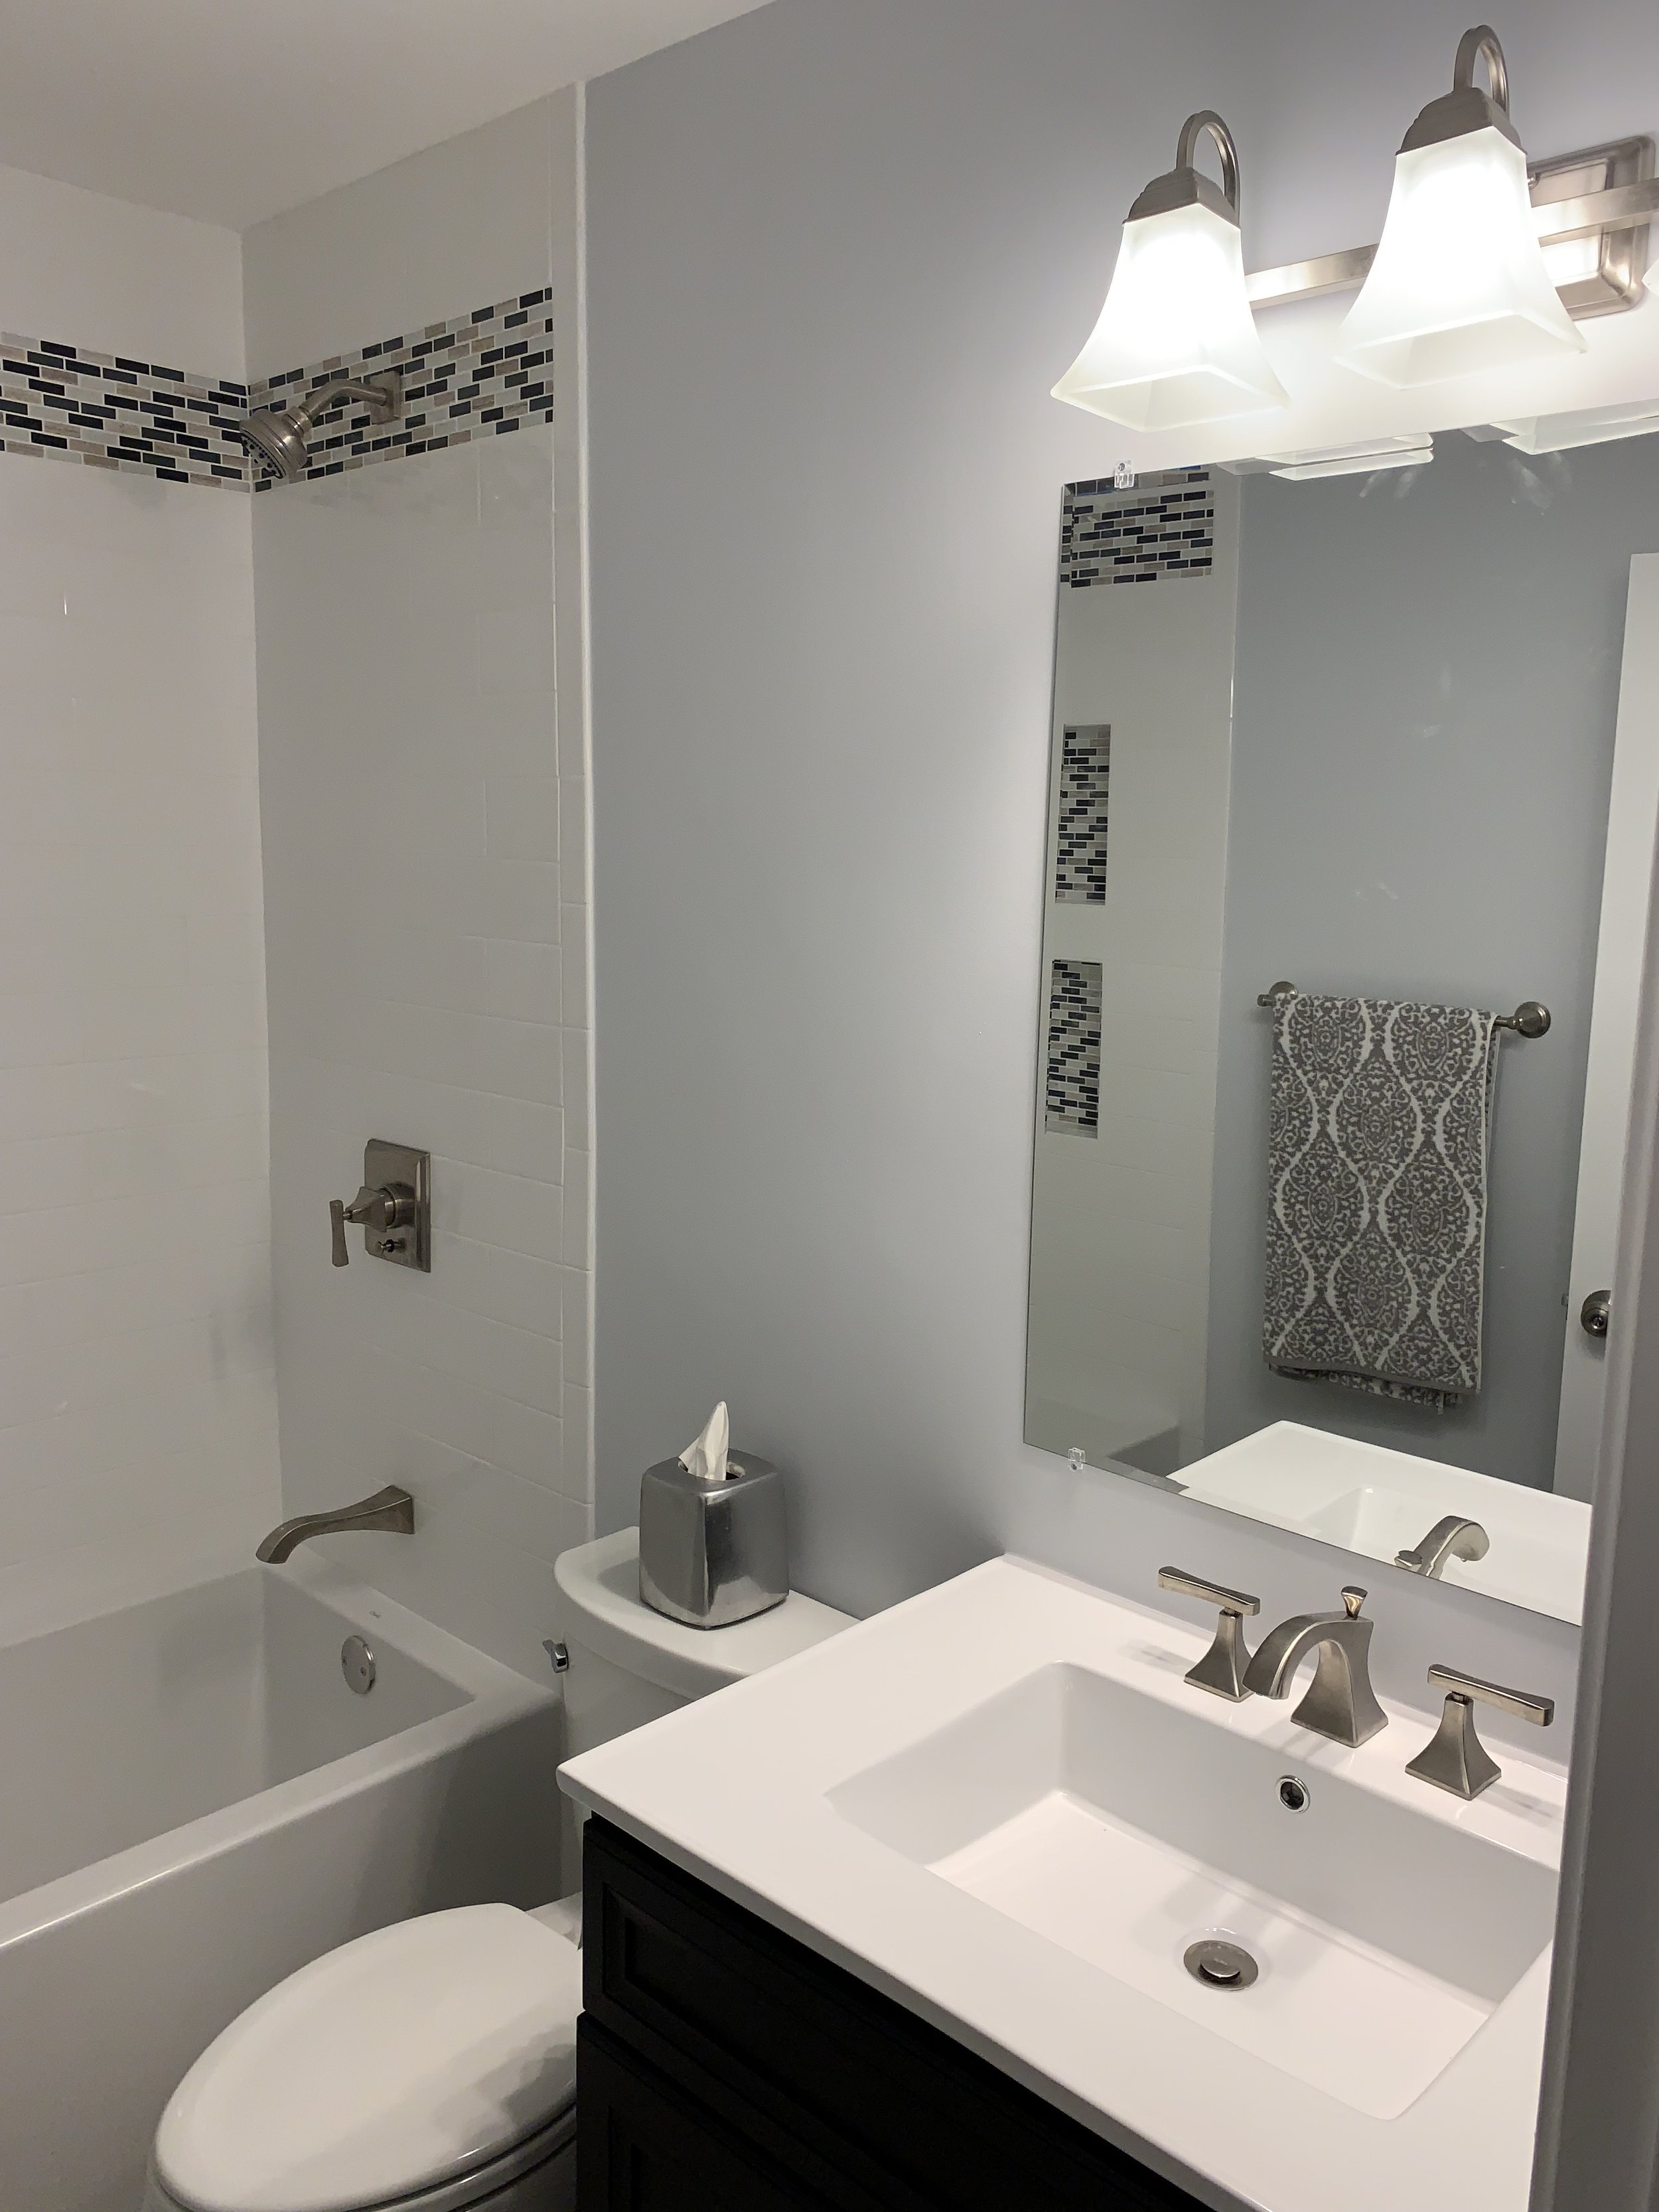 oakton bathroom vanity.JPG